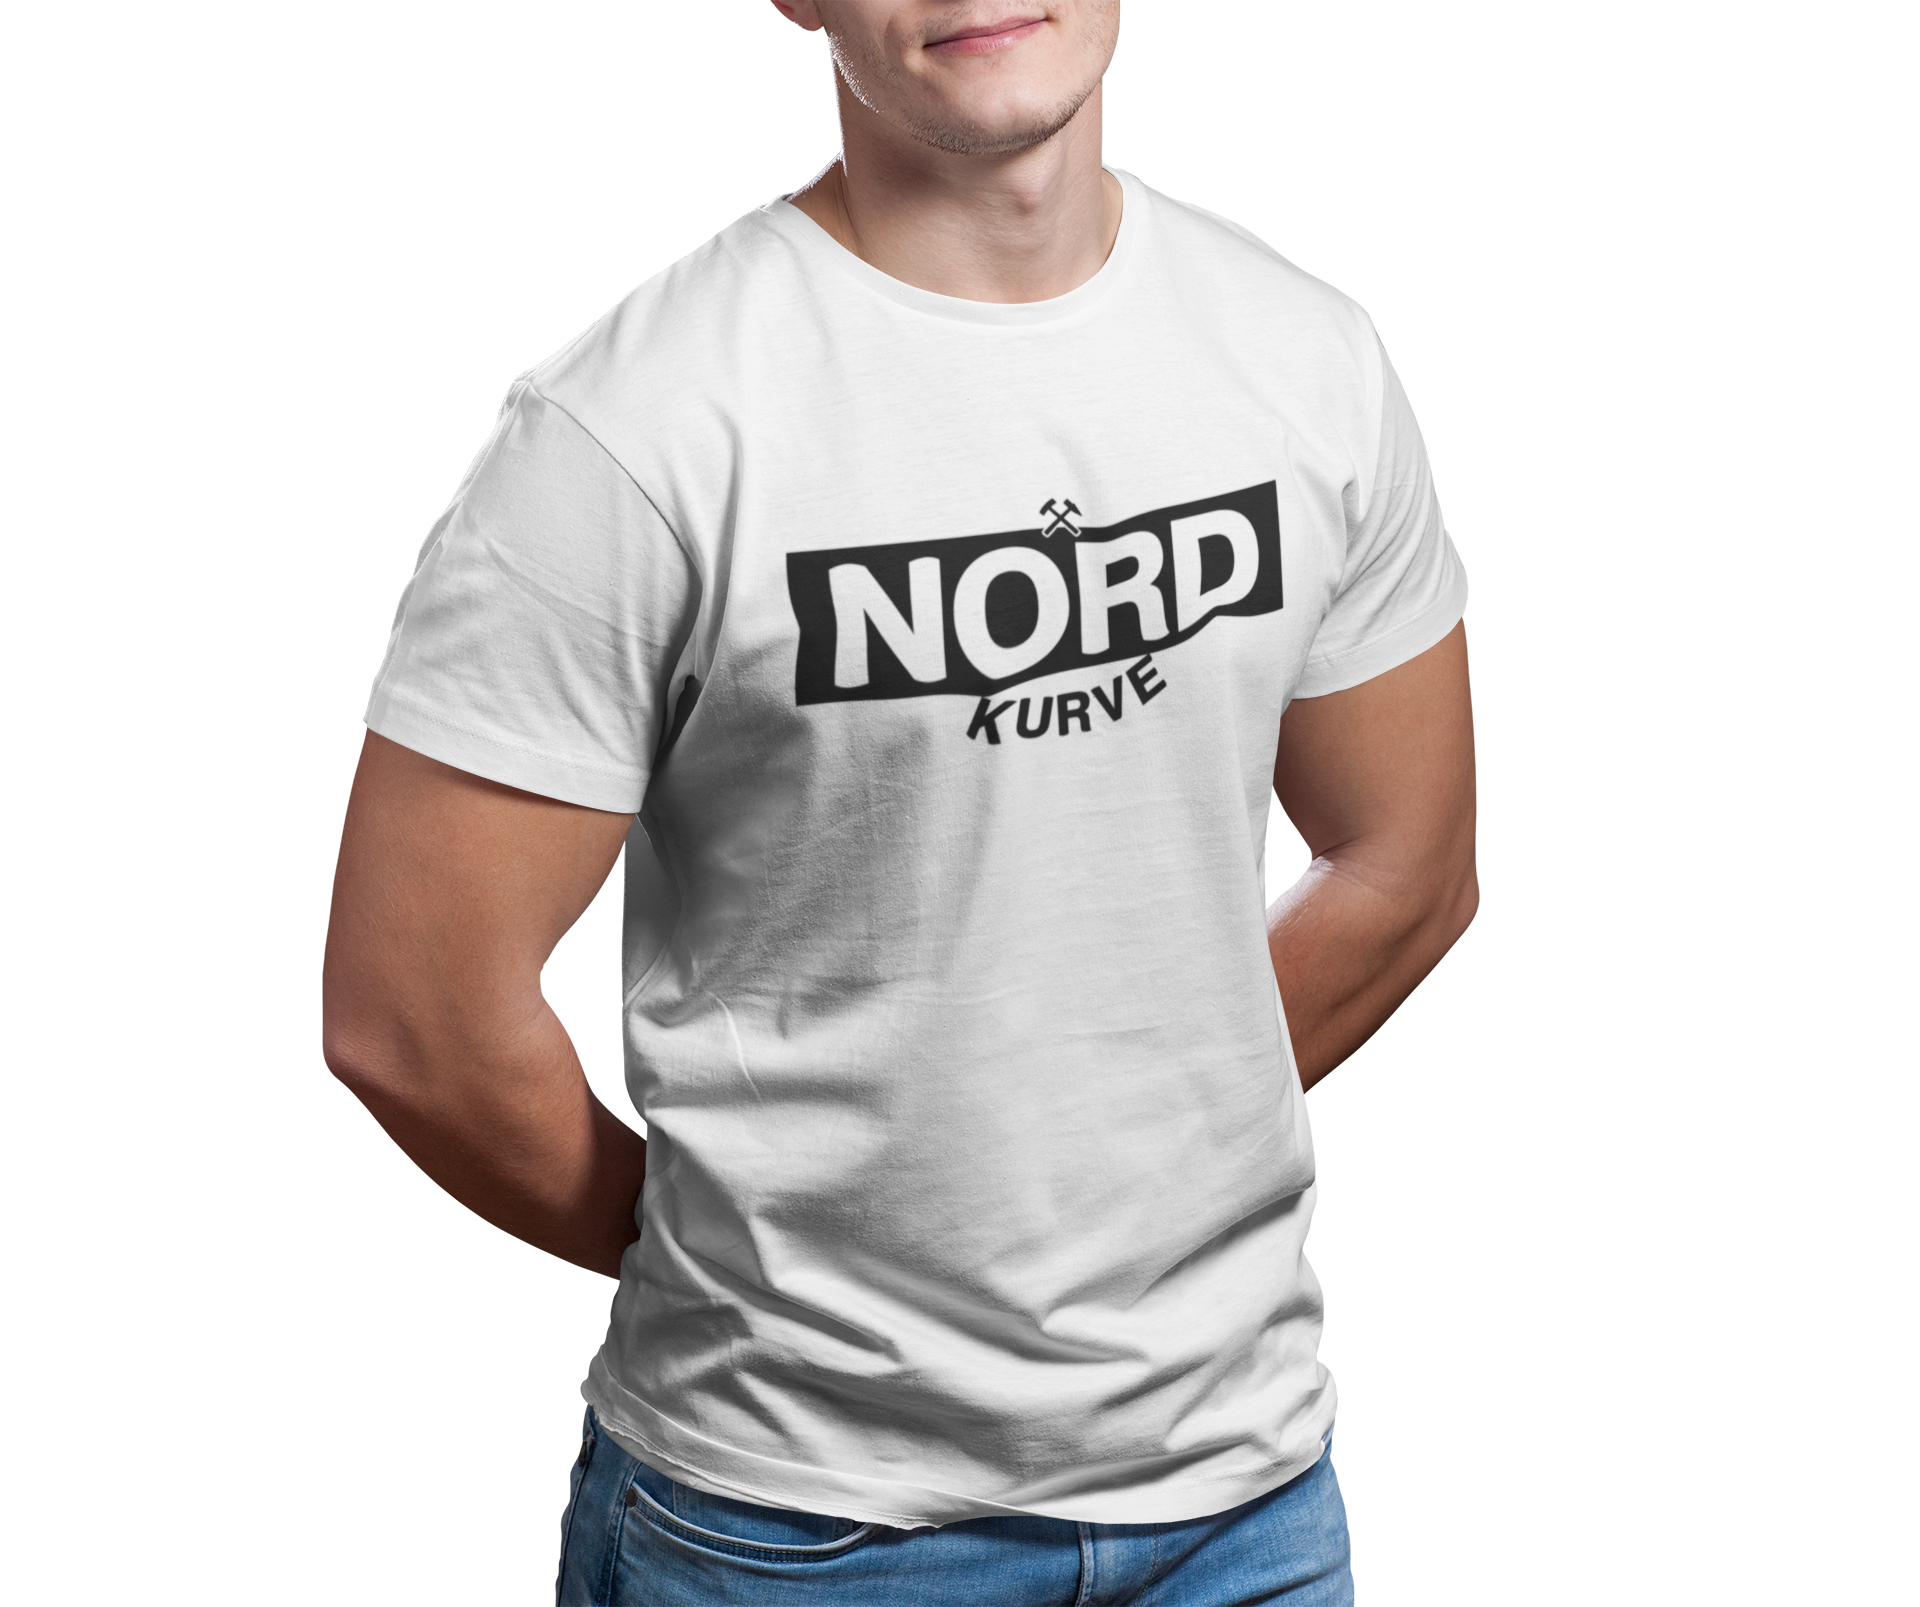 Nordkurve T-Shirt